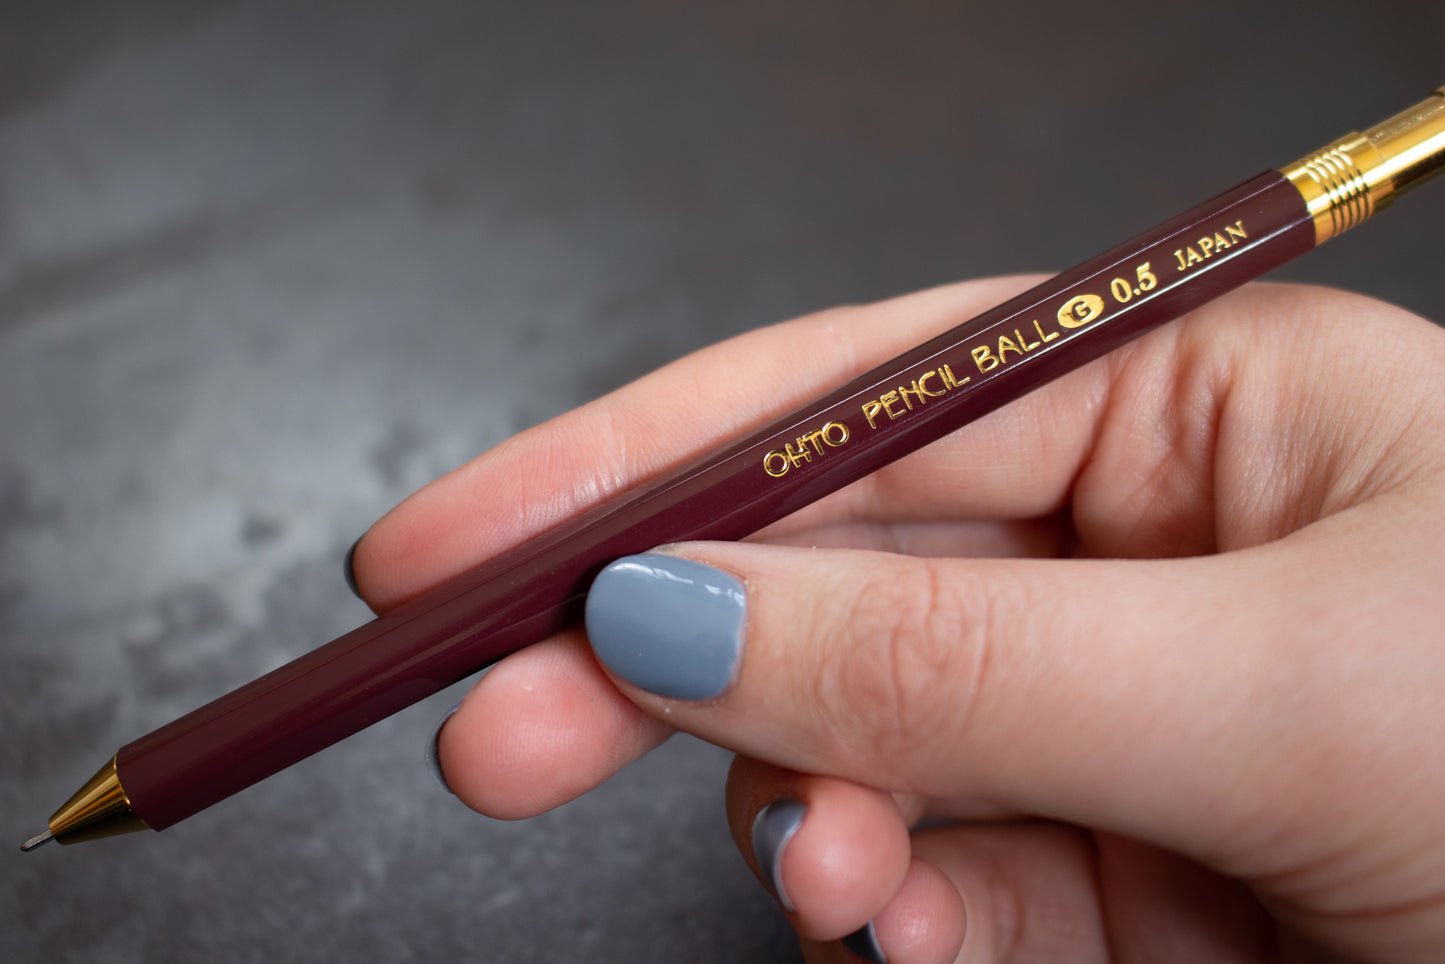 OHTO Pencil Ball 0.5mm Gel Pen - Wine Red | Flywheel | Stationery | Tasmania